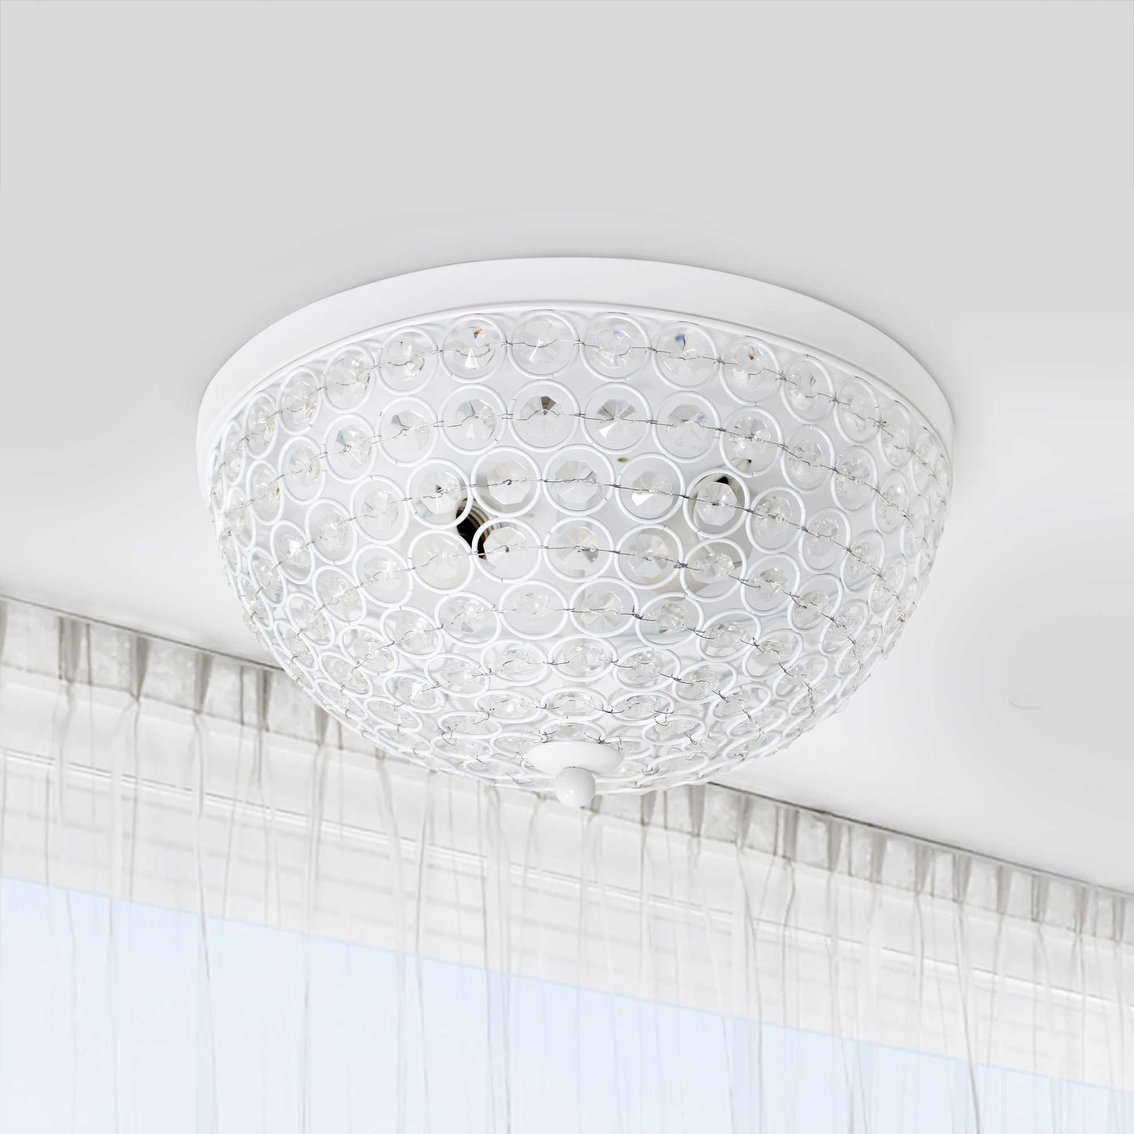 Lalia Home Crystal Glam 2 Light Ceiling Flush Mount Lamps 2 pk. - Image 5 of 7